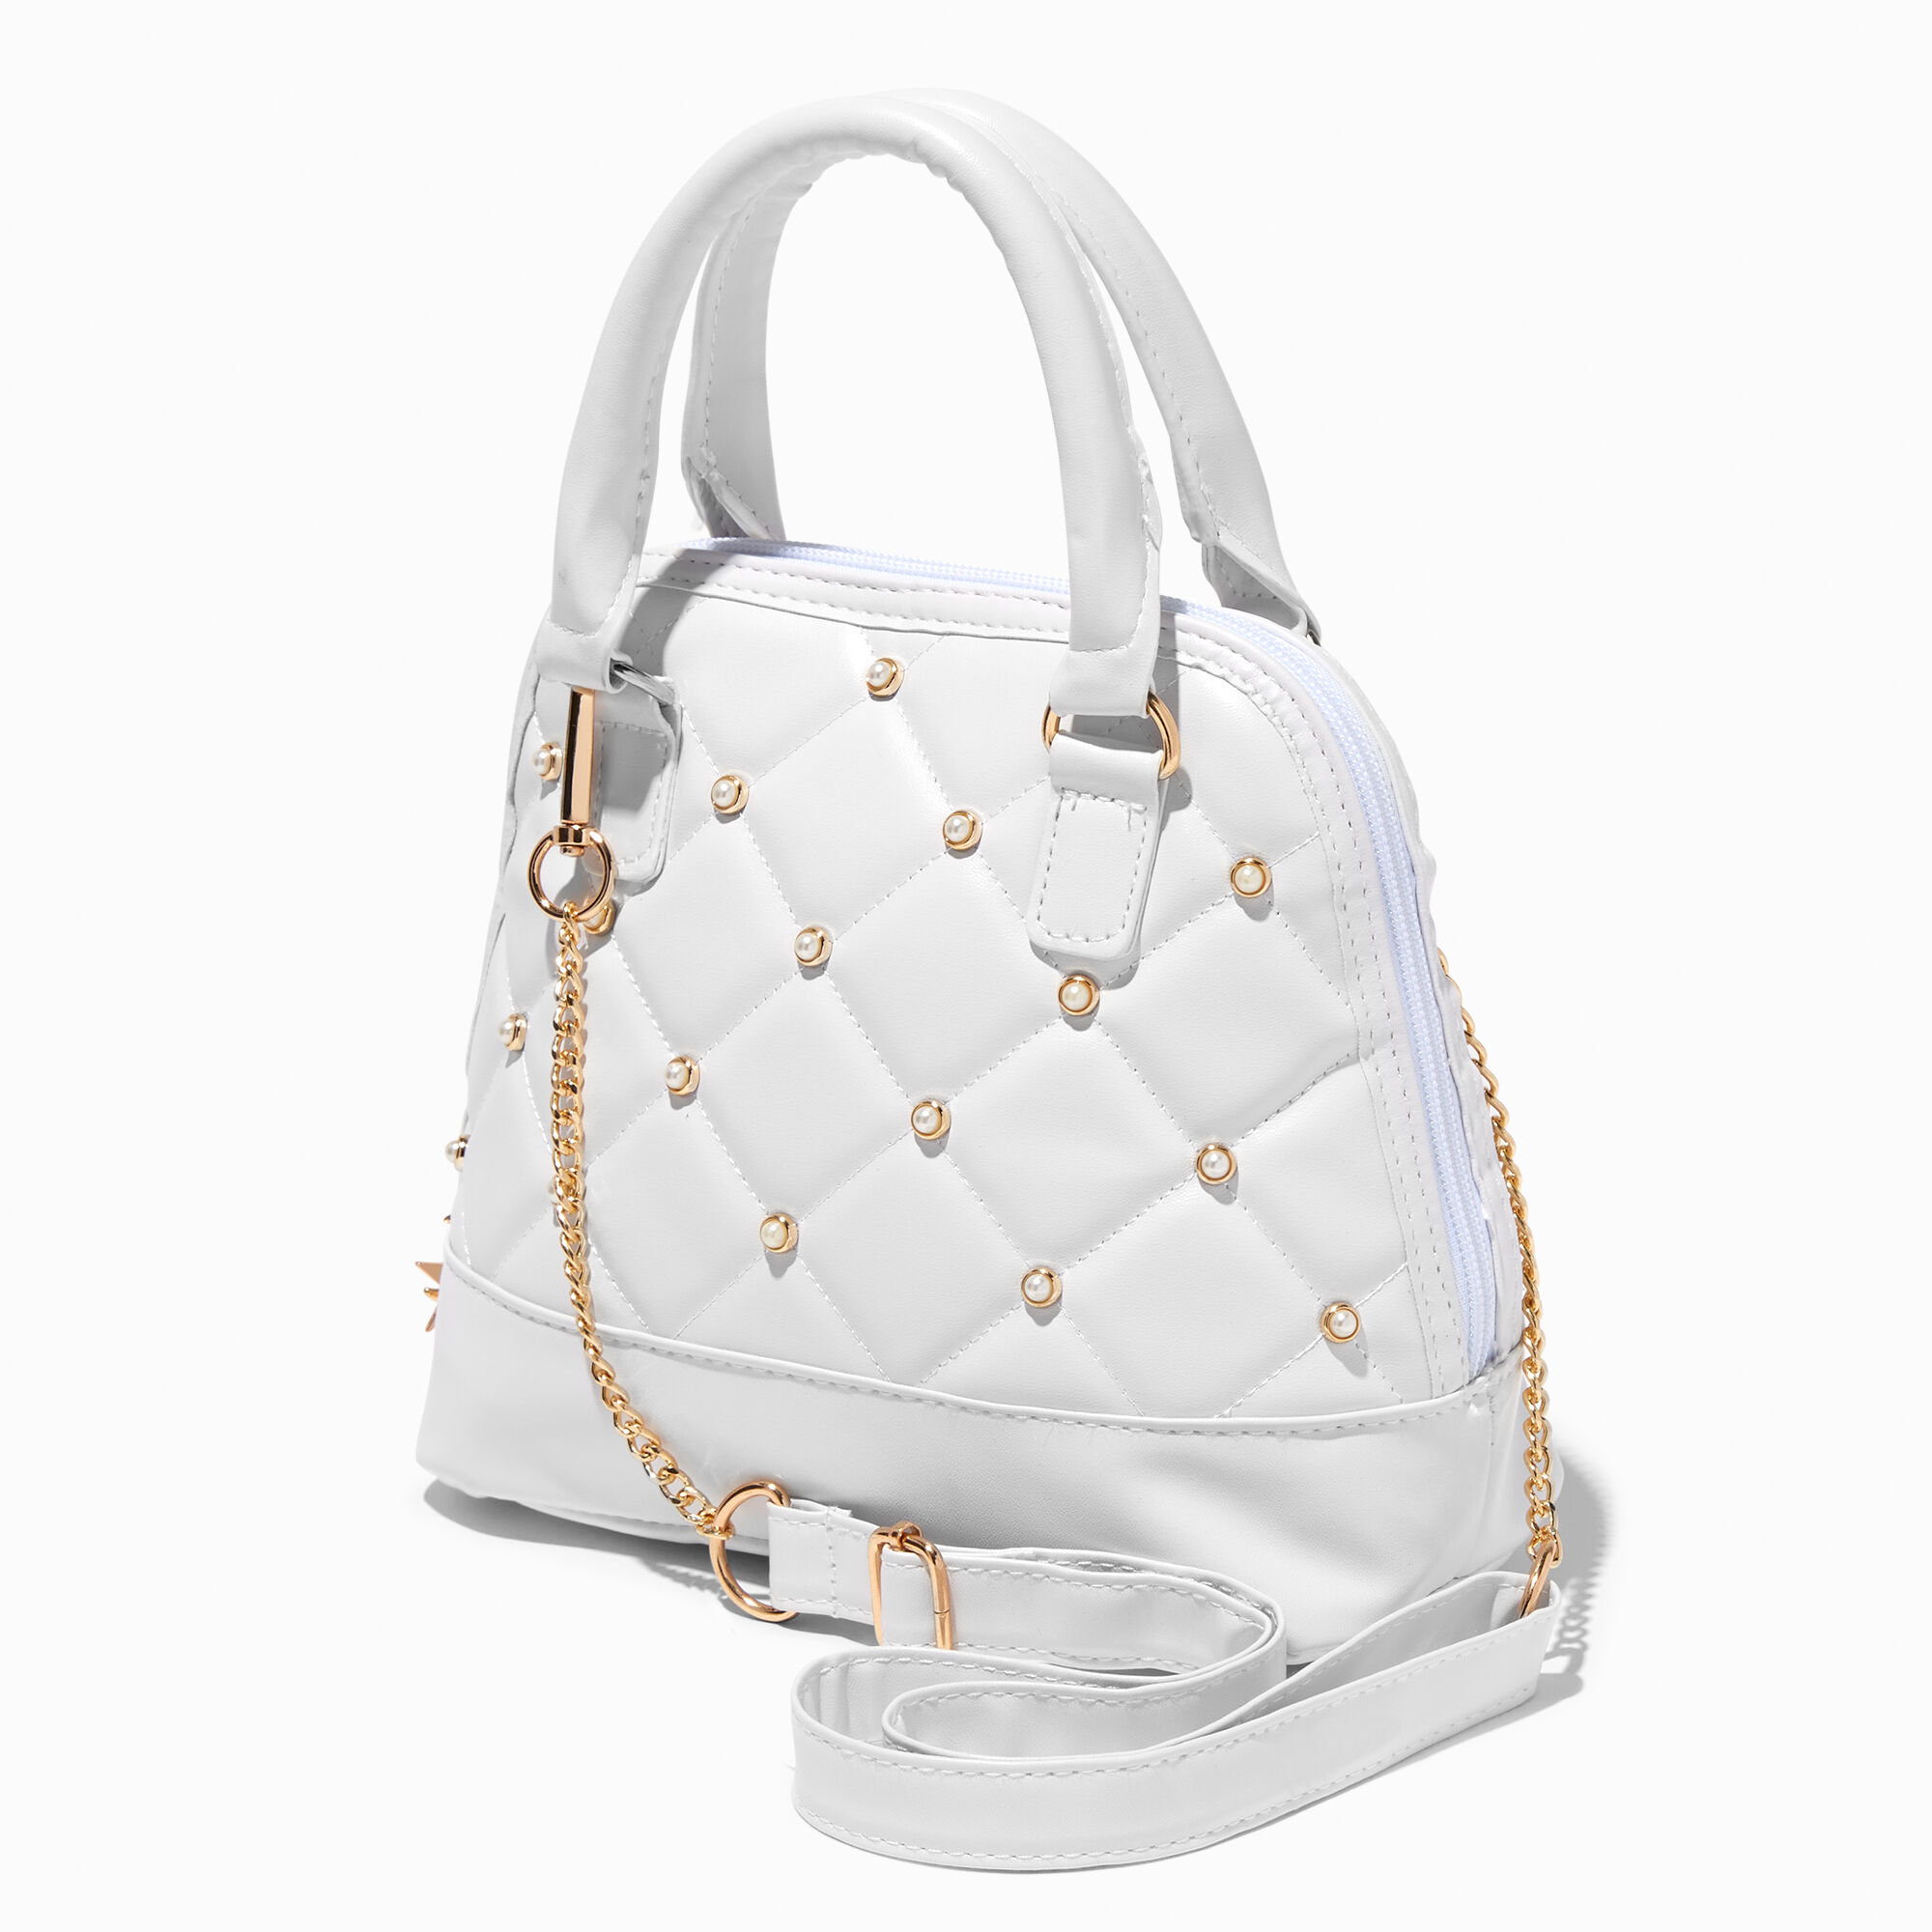 Claire's Club Sparkle Flower Bag - White | White bag, Bags, Flower bag